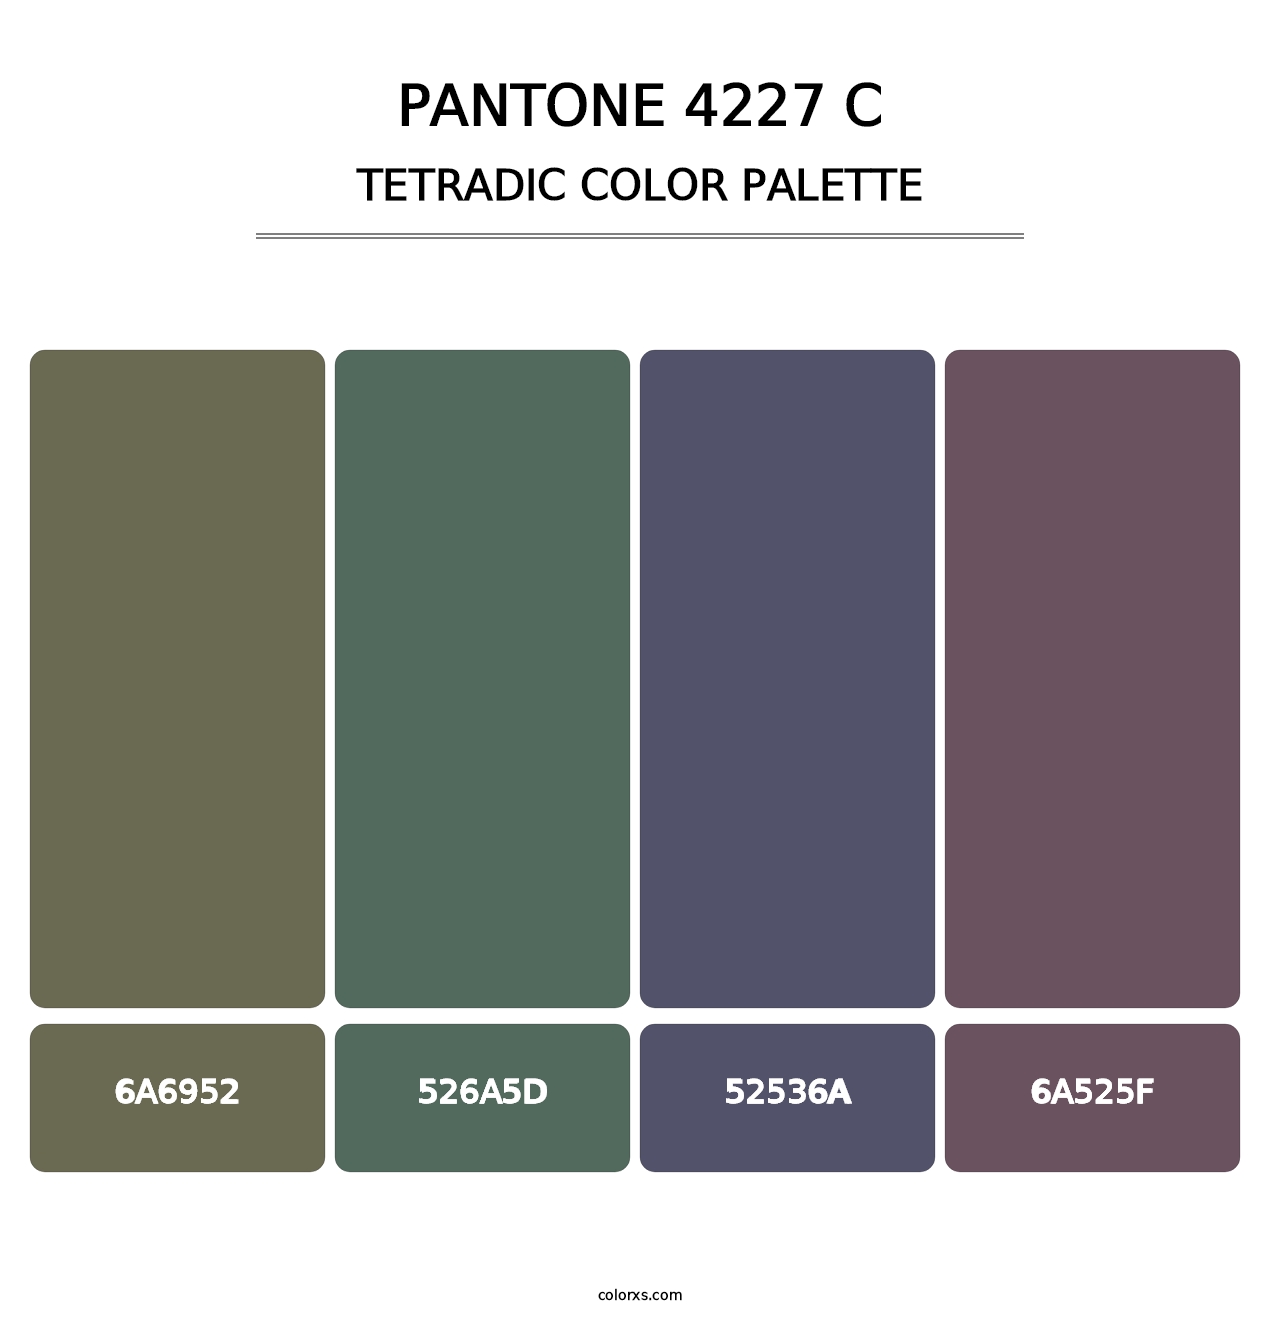 PANTONE 4227 C - Tetradic Color Palette